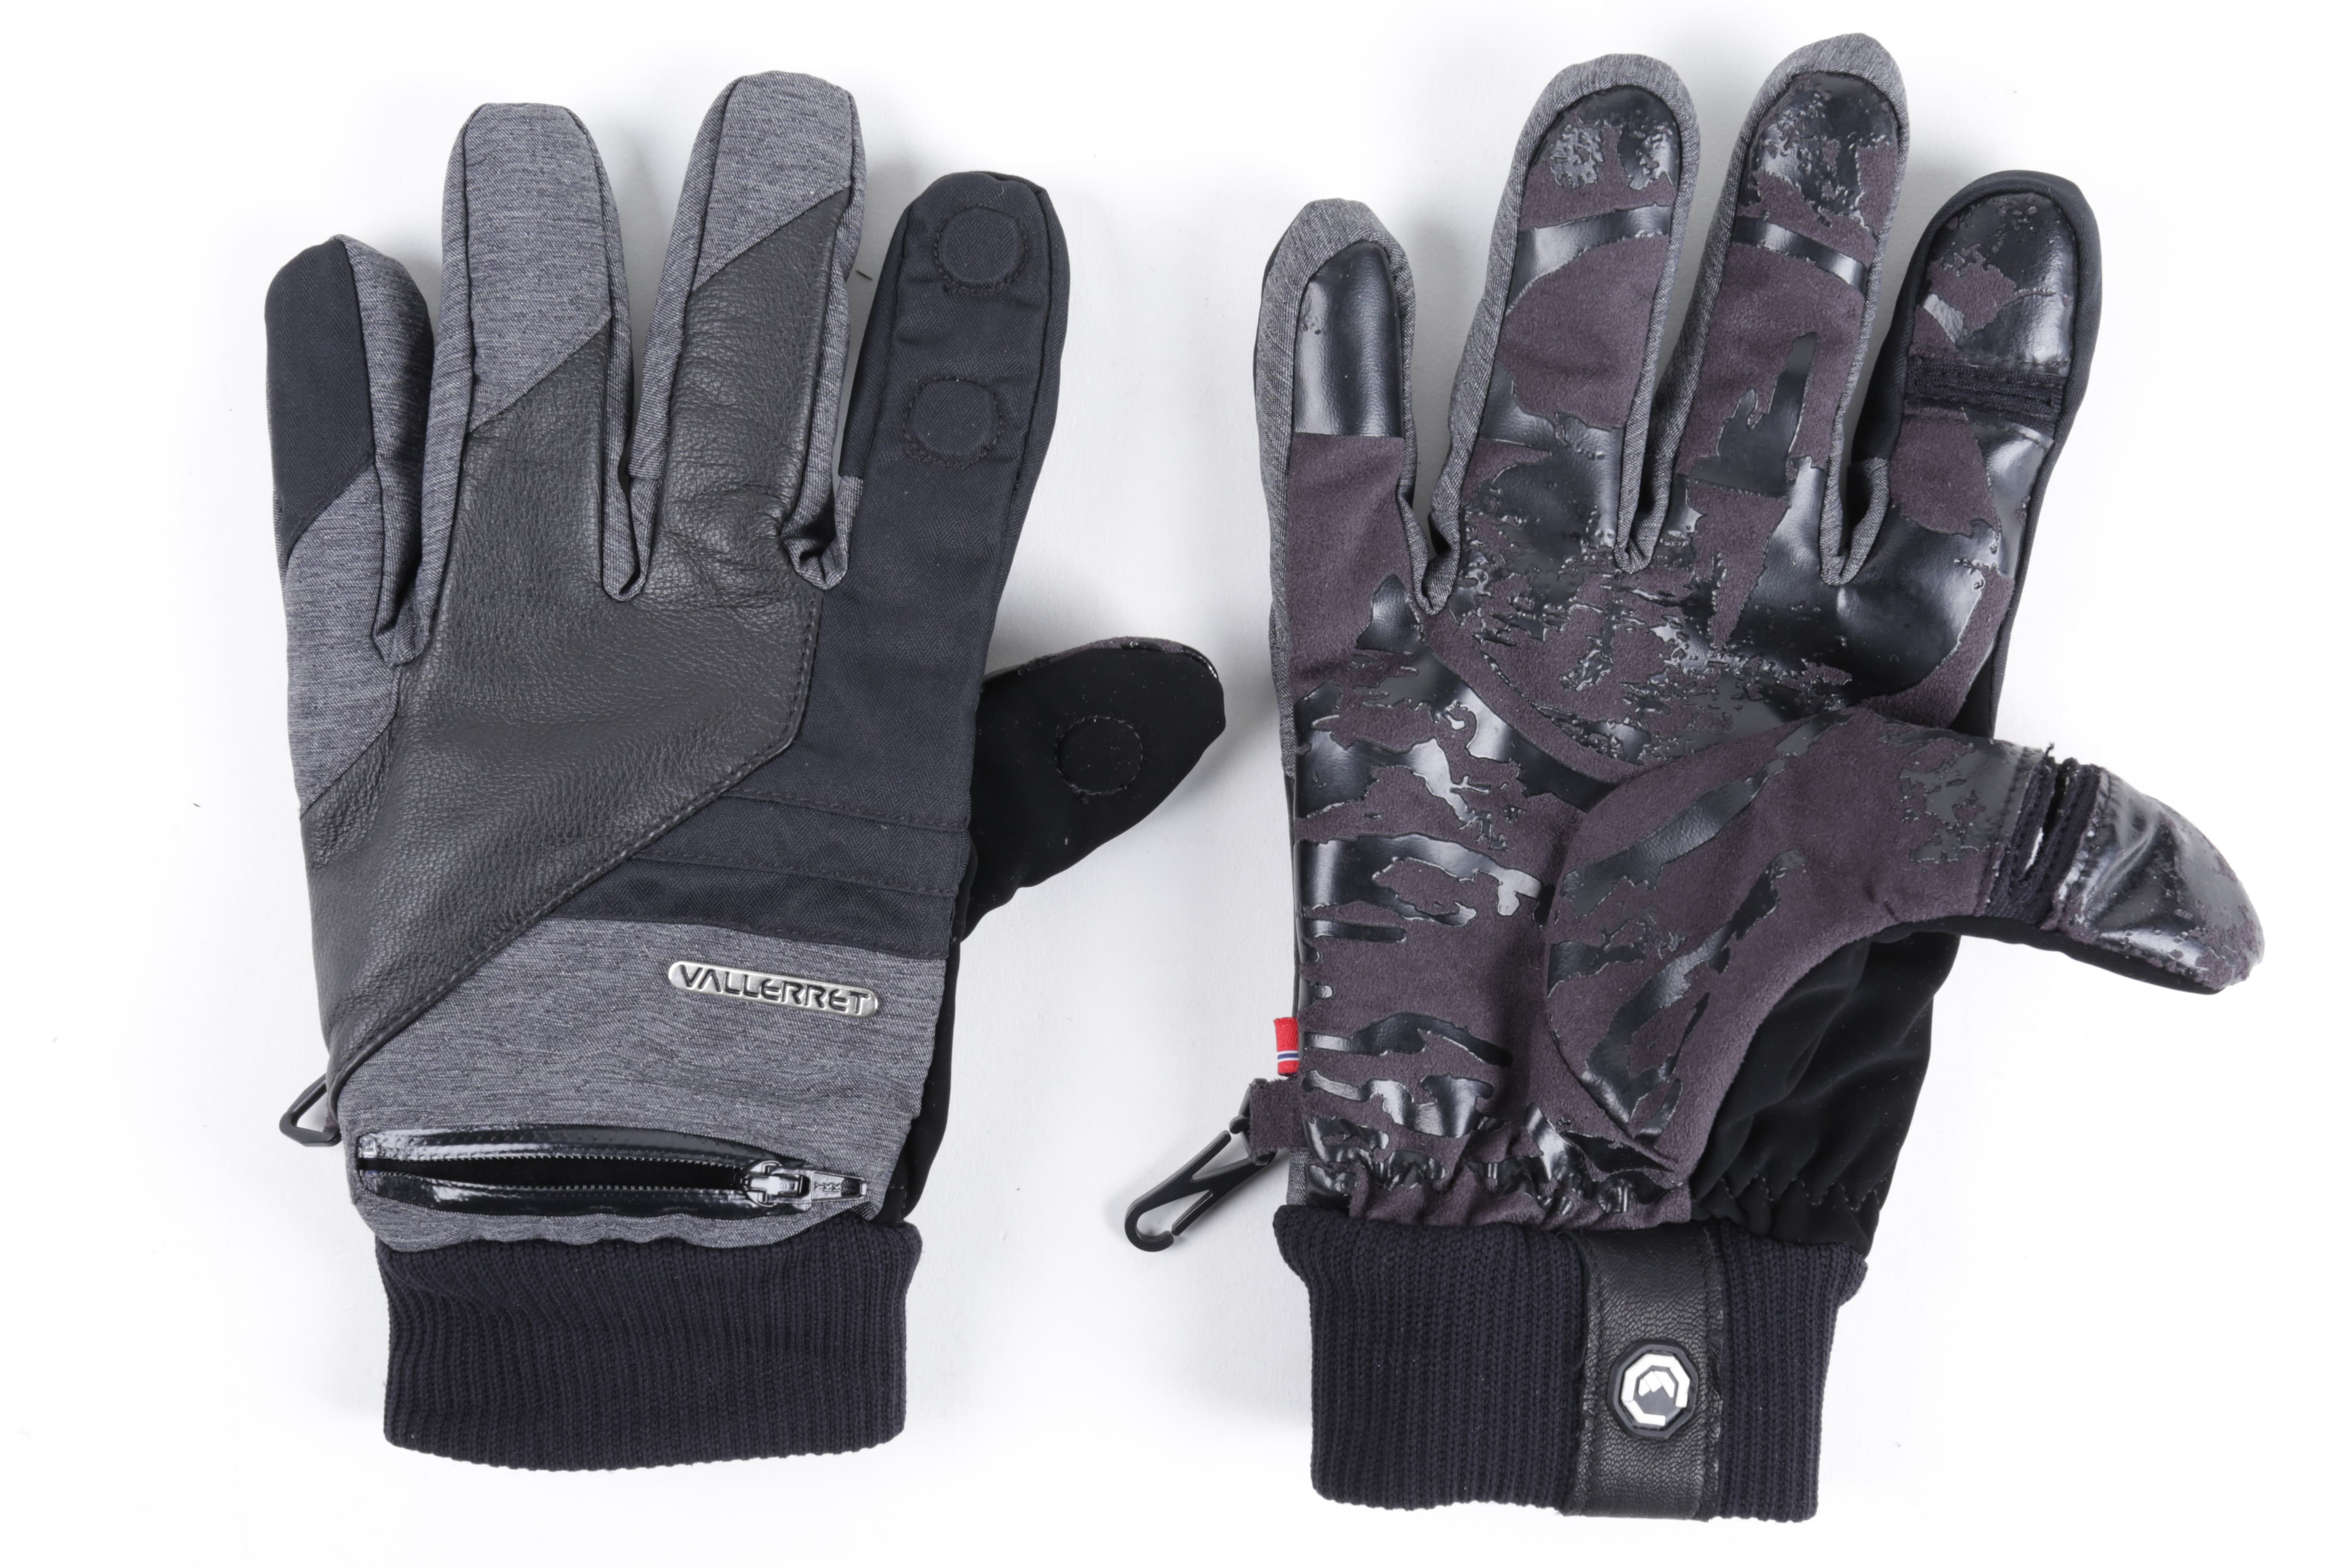 Markhof Pro Model Photography Glove  Photography gloves, Gloves,  Photography